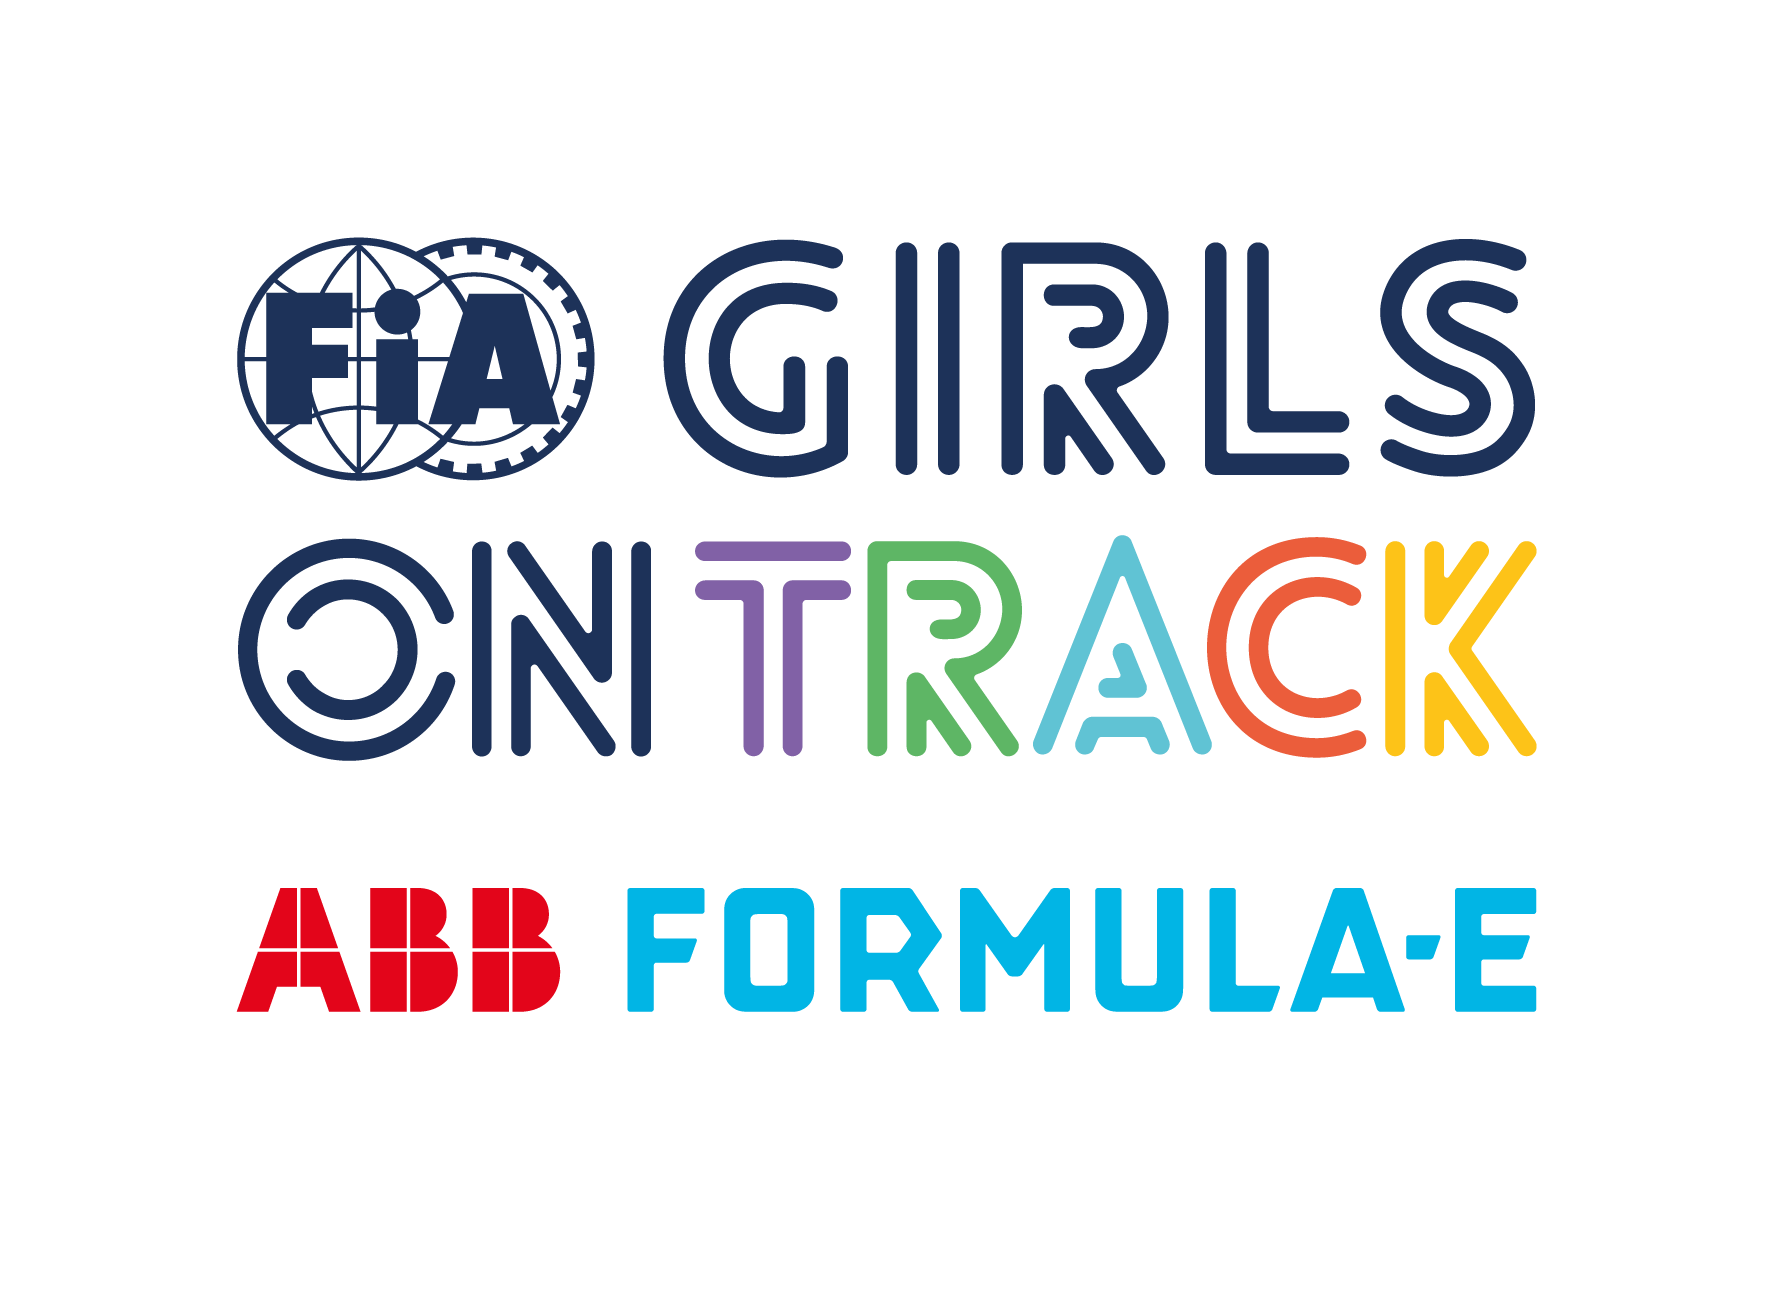 FIA Girls On Track 